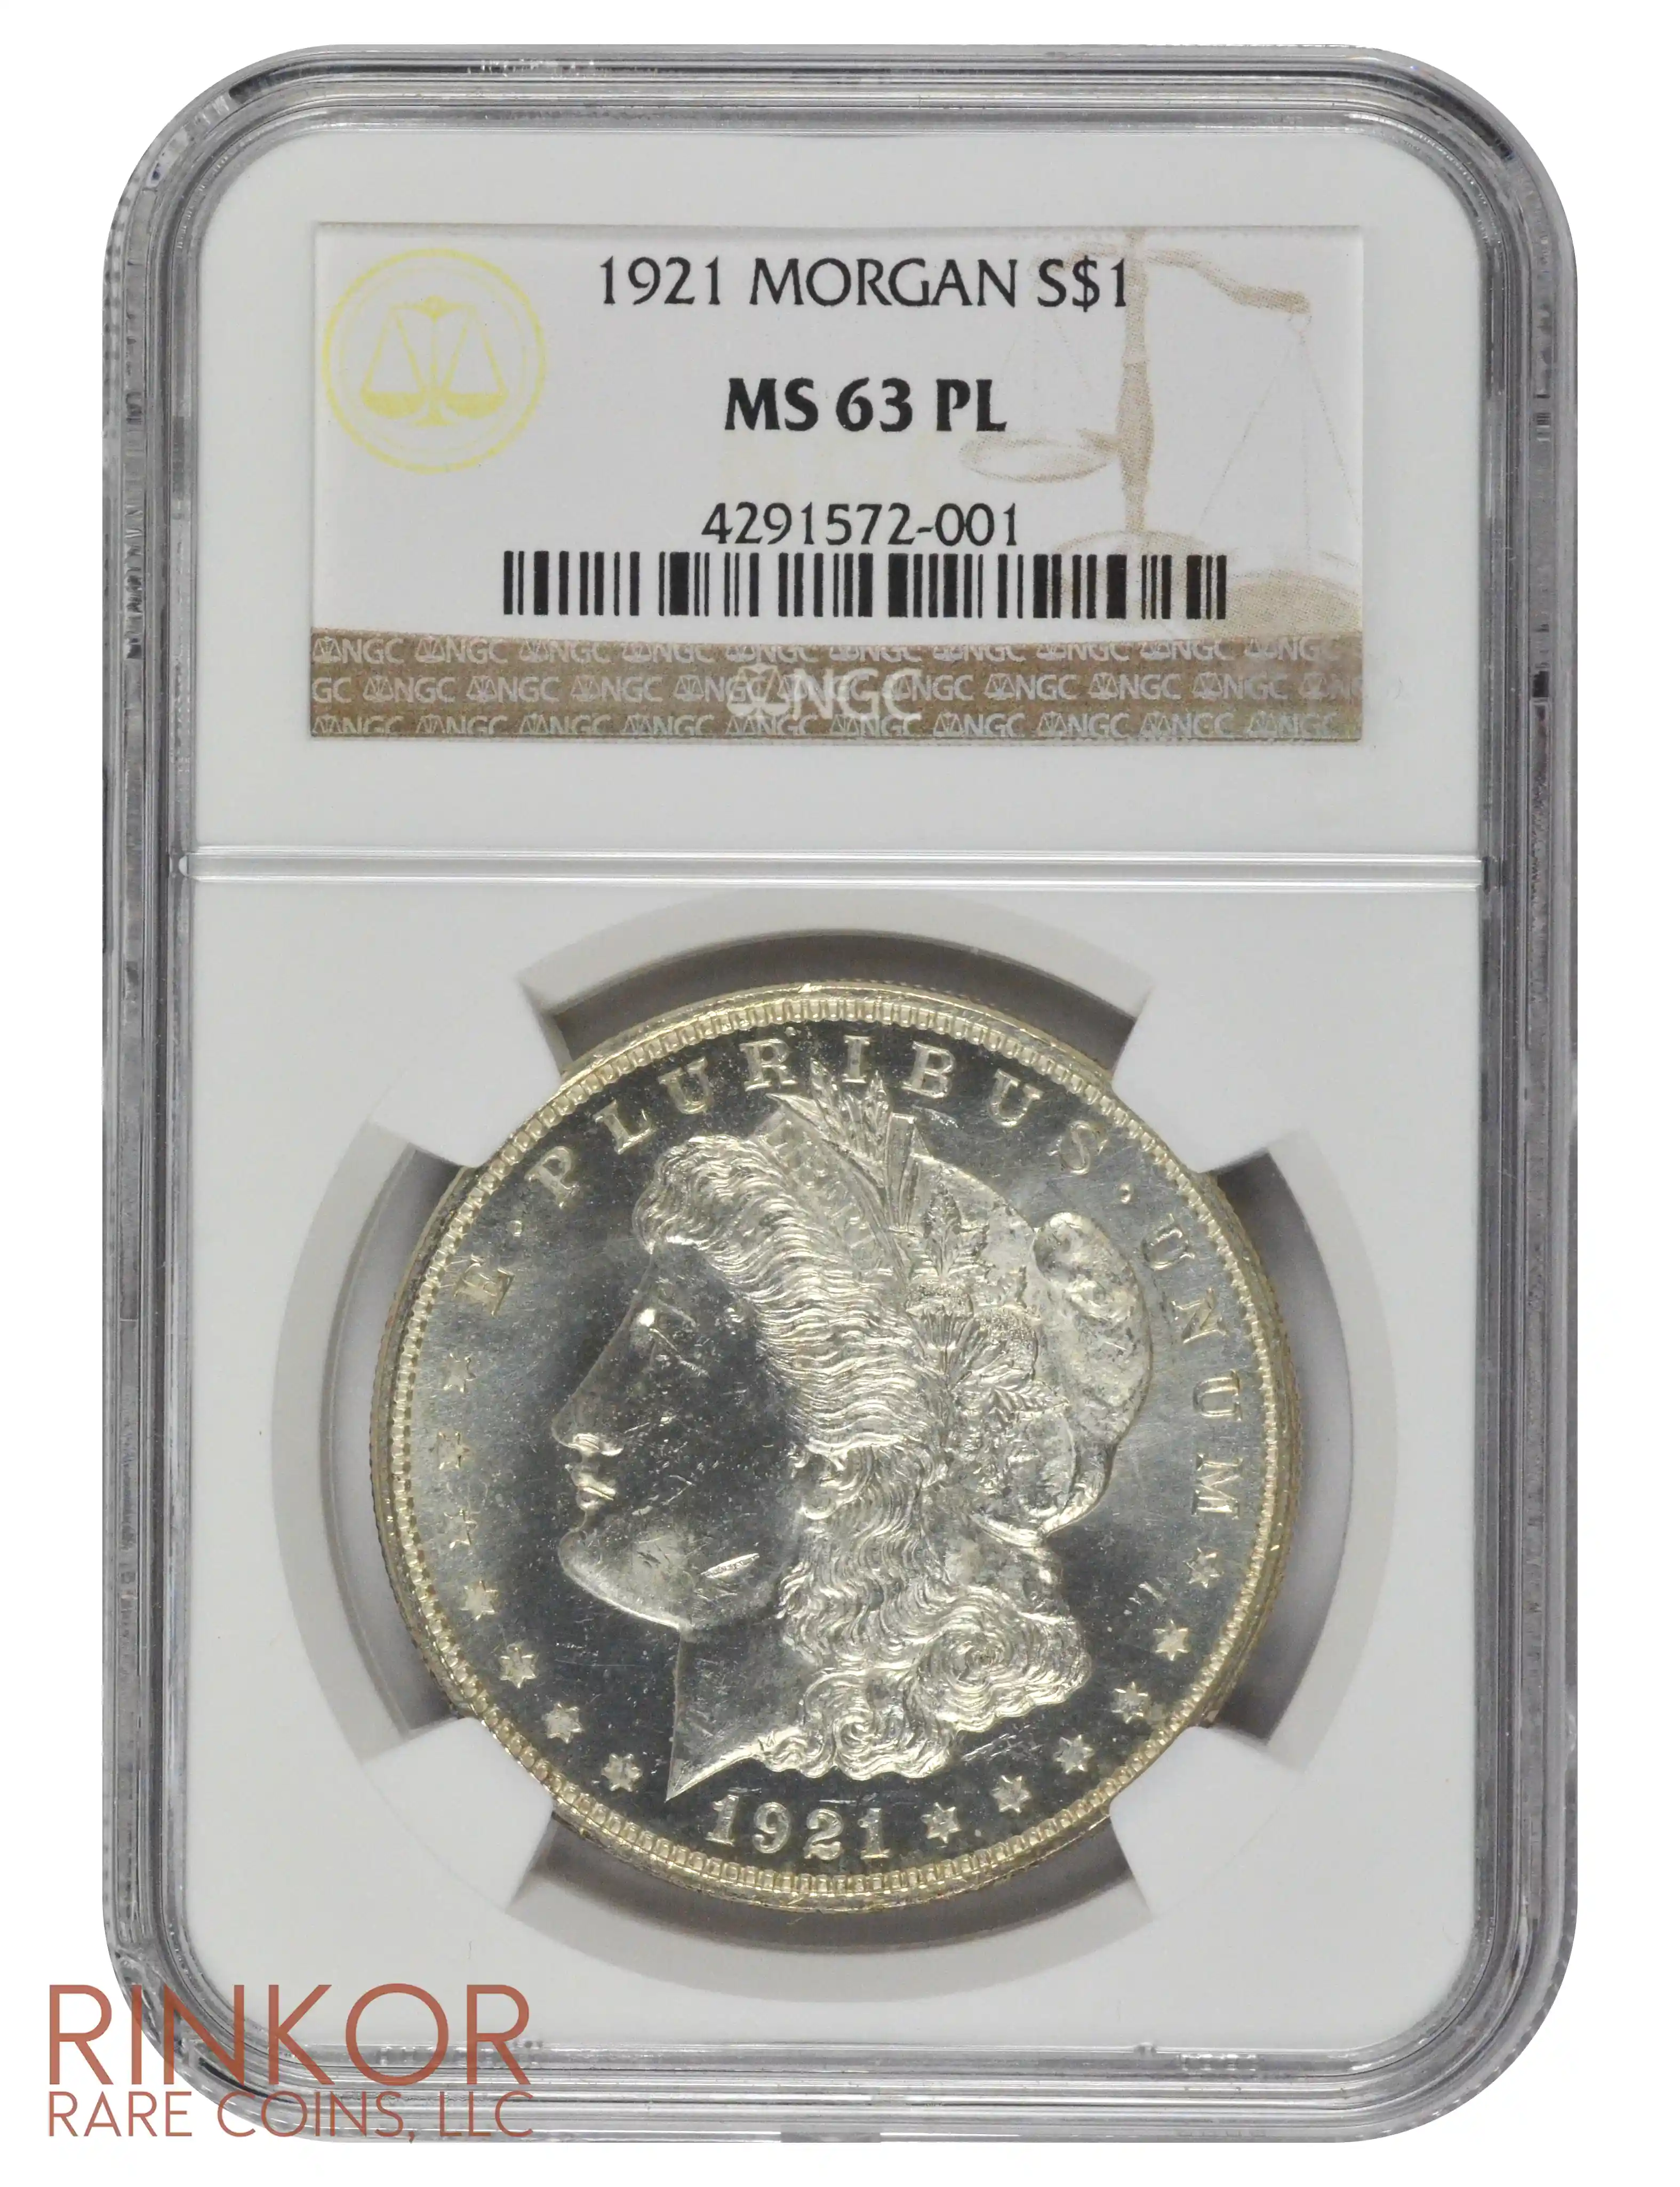 1921 Morgan $1 NGC MS 63 PL